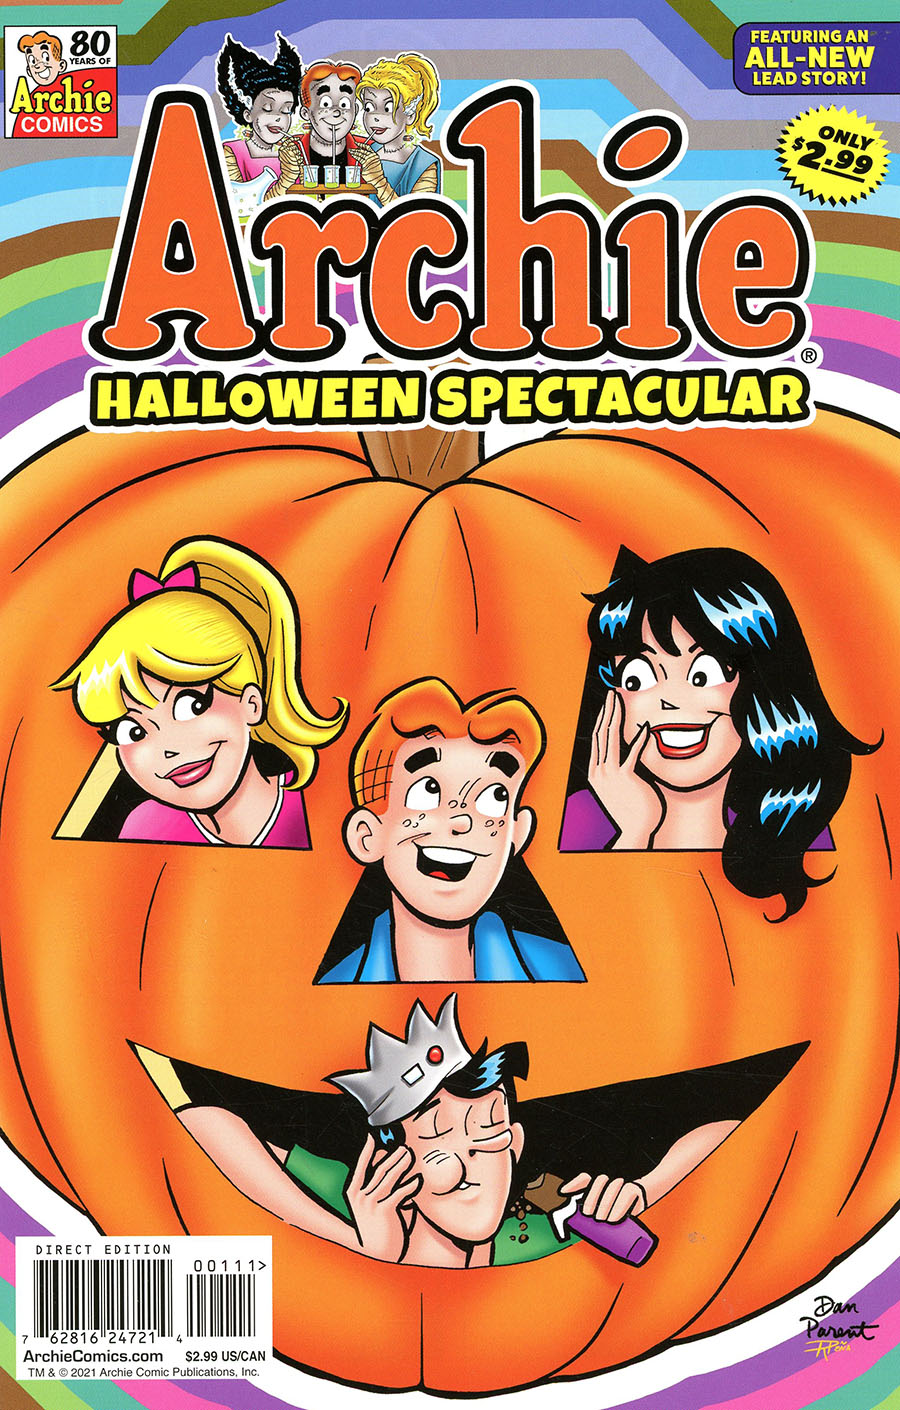 Archies Halloween Spectacular #1 2021